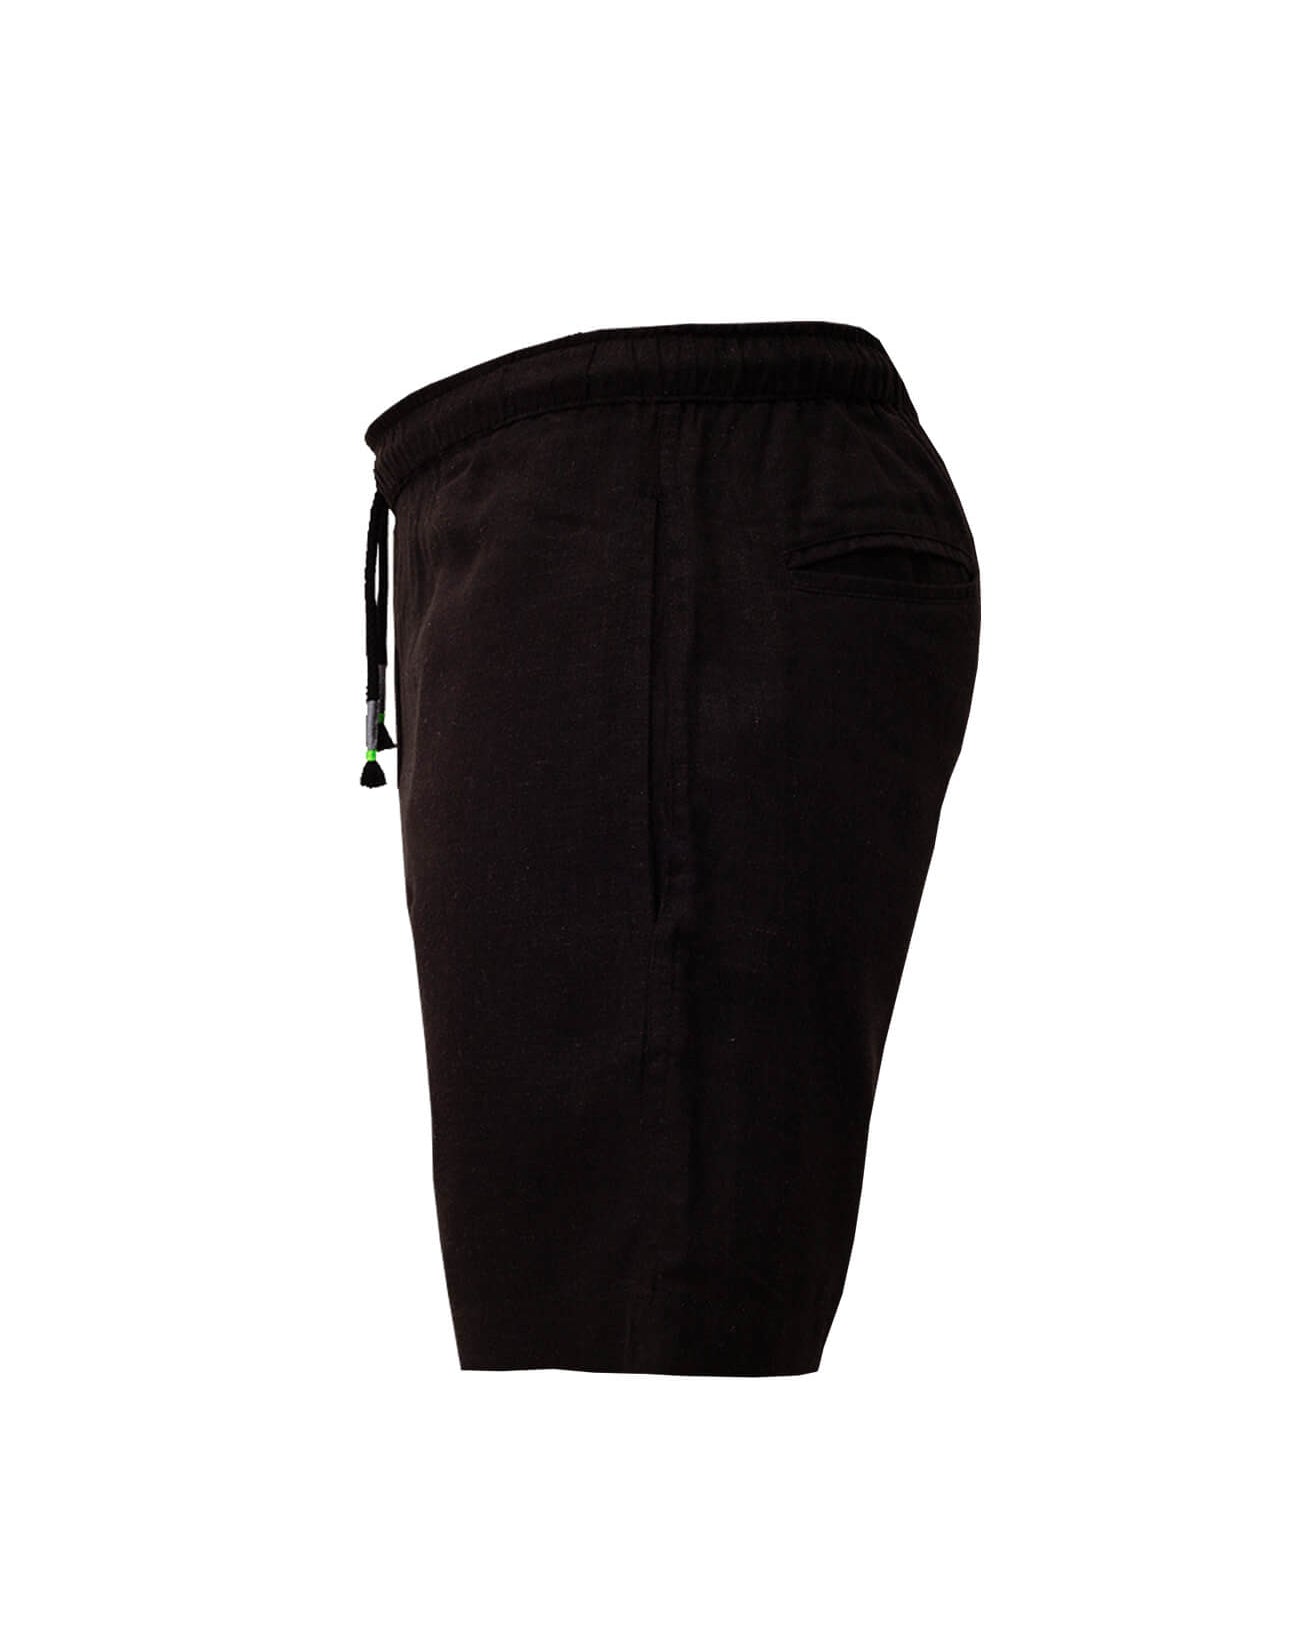 TODOS SANTOS  Linen Shorts - Black - CRASQI